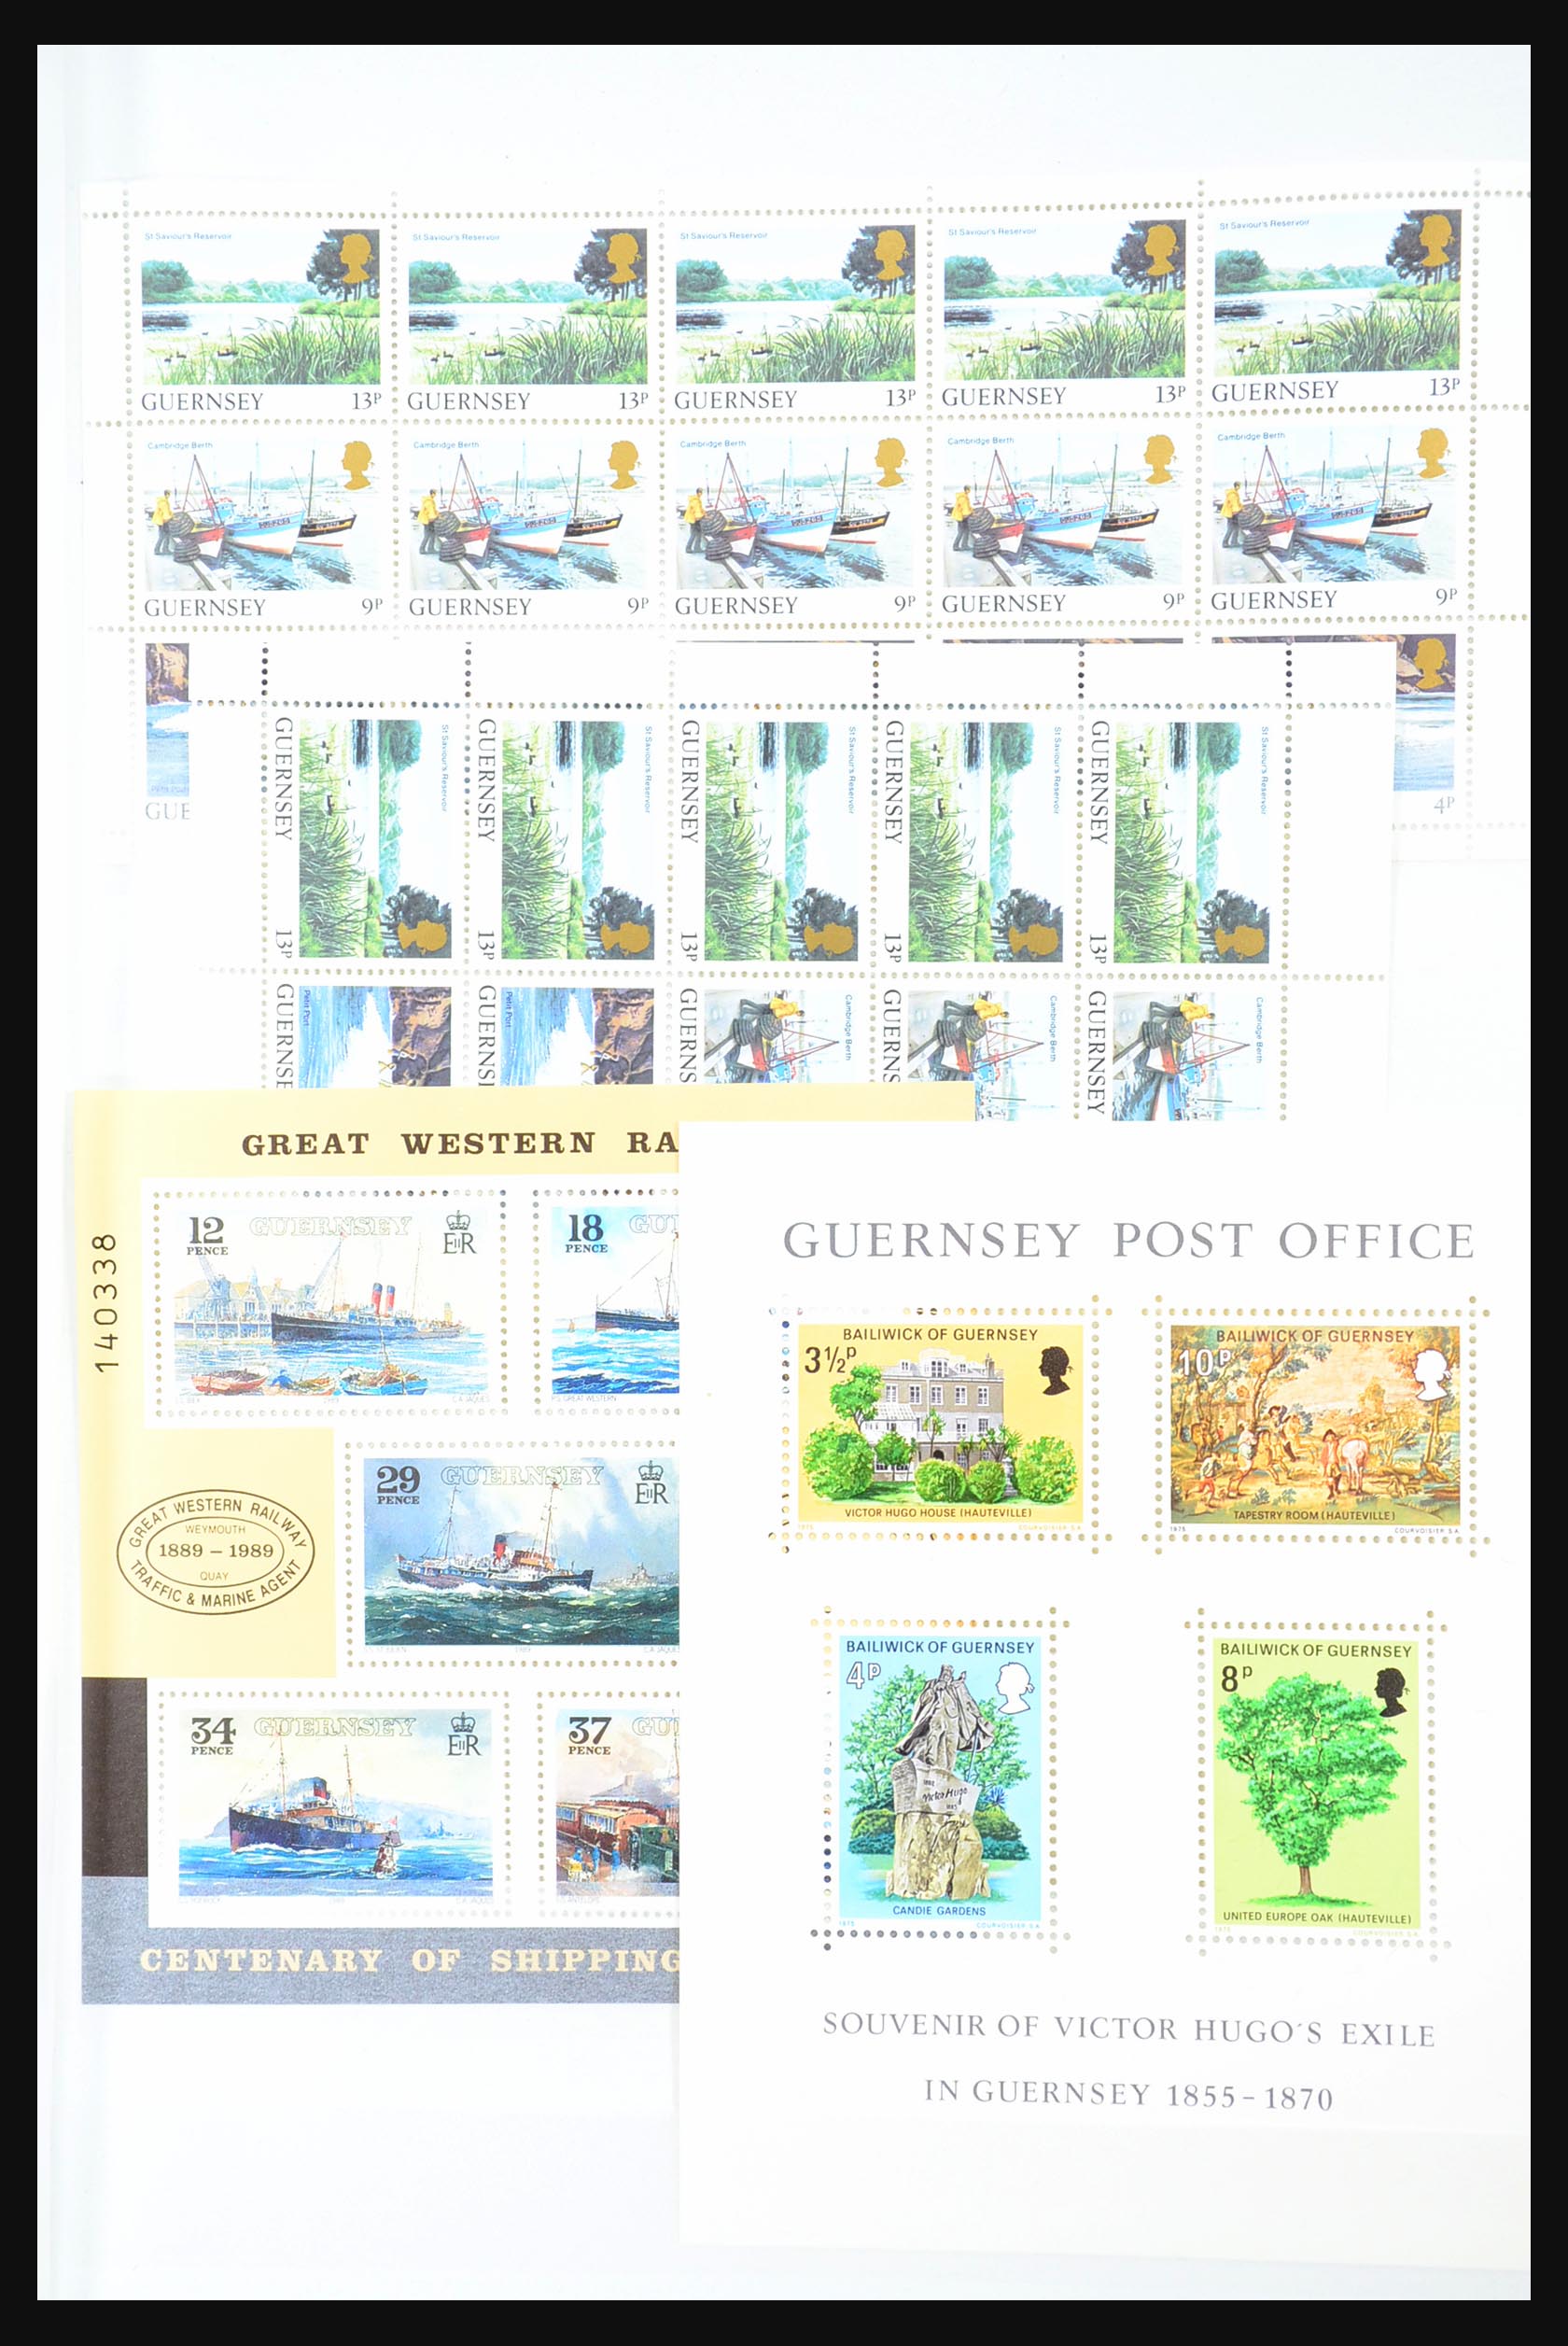 31249 063 - 31249 Channel Islands souvenir sheets and sheetlets 1978-1997.